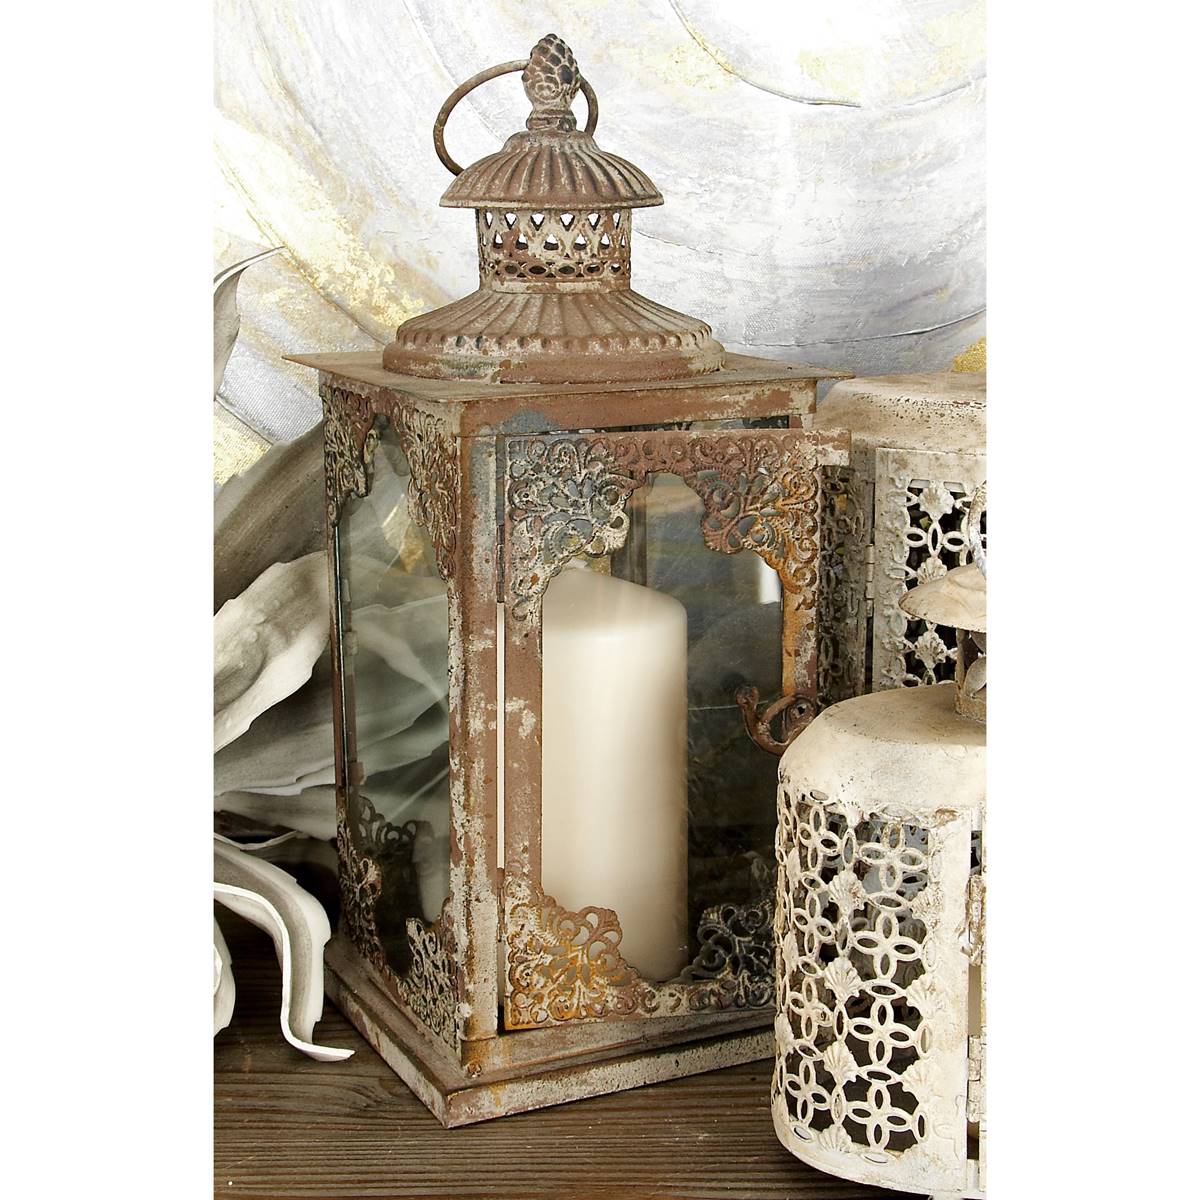 9th & Pike(R) Decorative Vintage Candle Holder Lantern